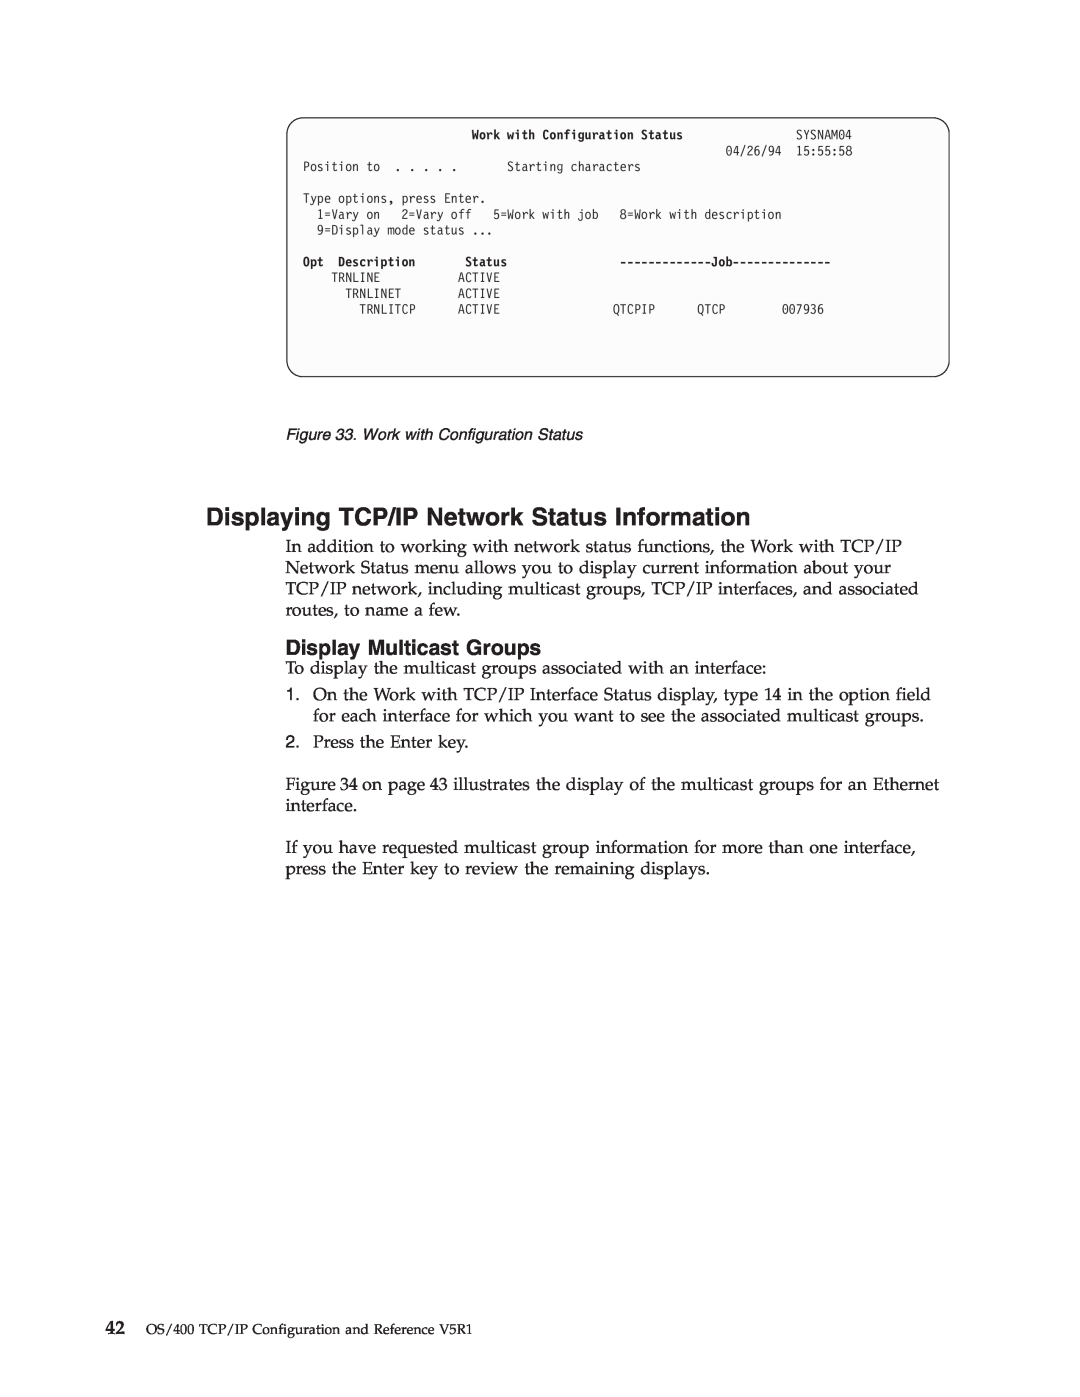 IBM SC41-5420-04 manual Displaying TCP/IP Network Status Information, Display Multicast Groups 